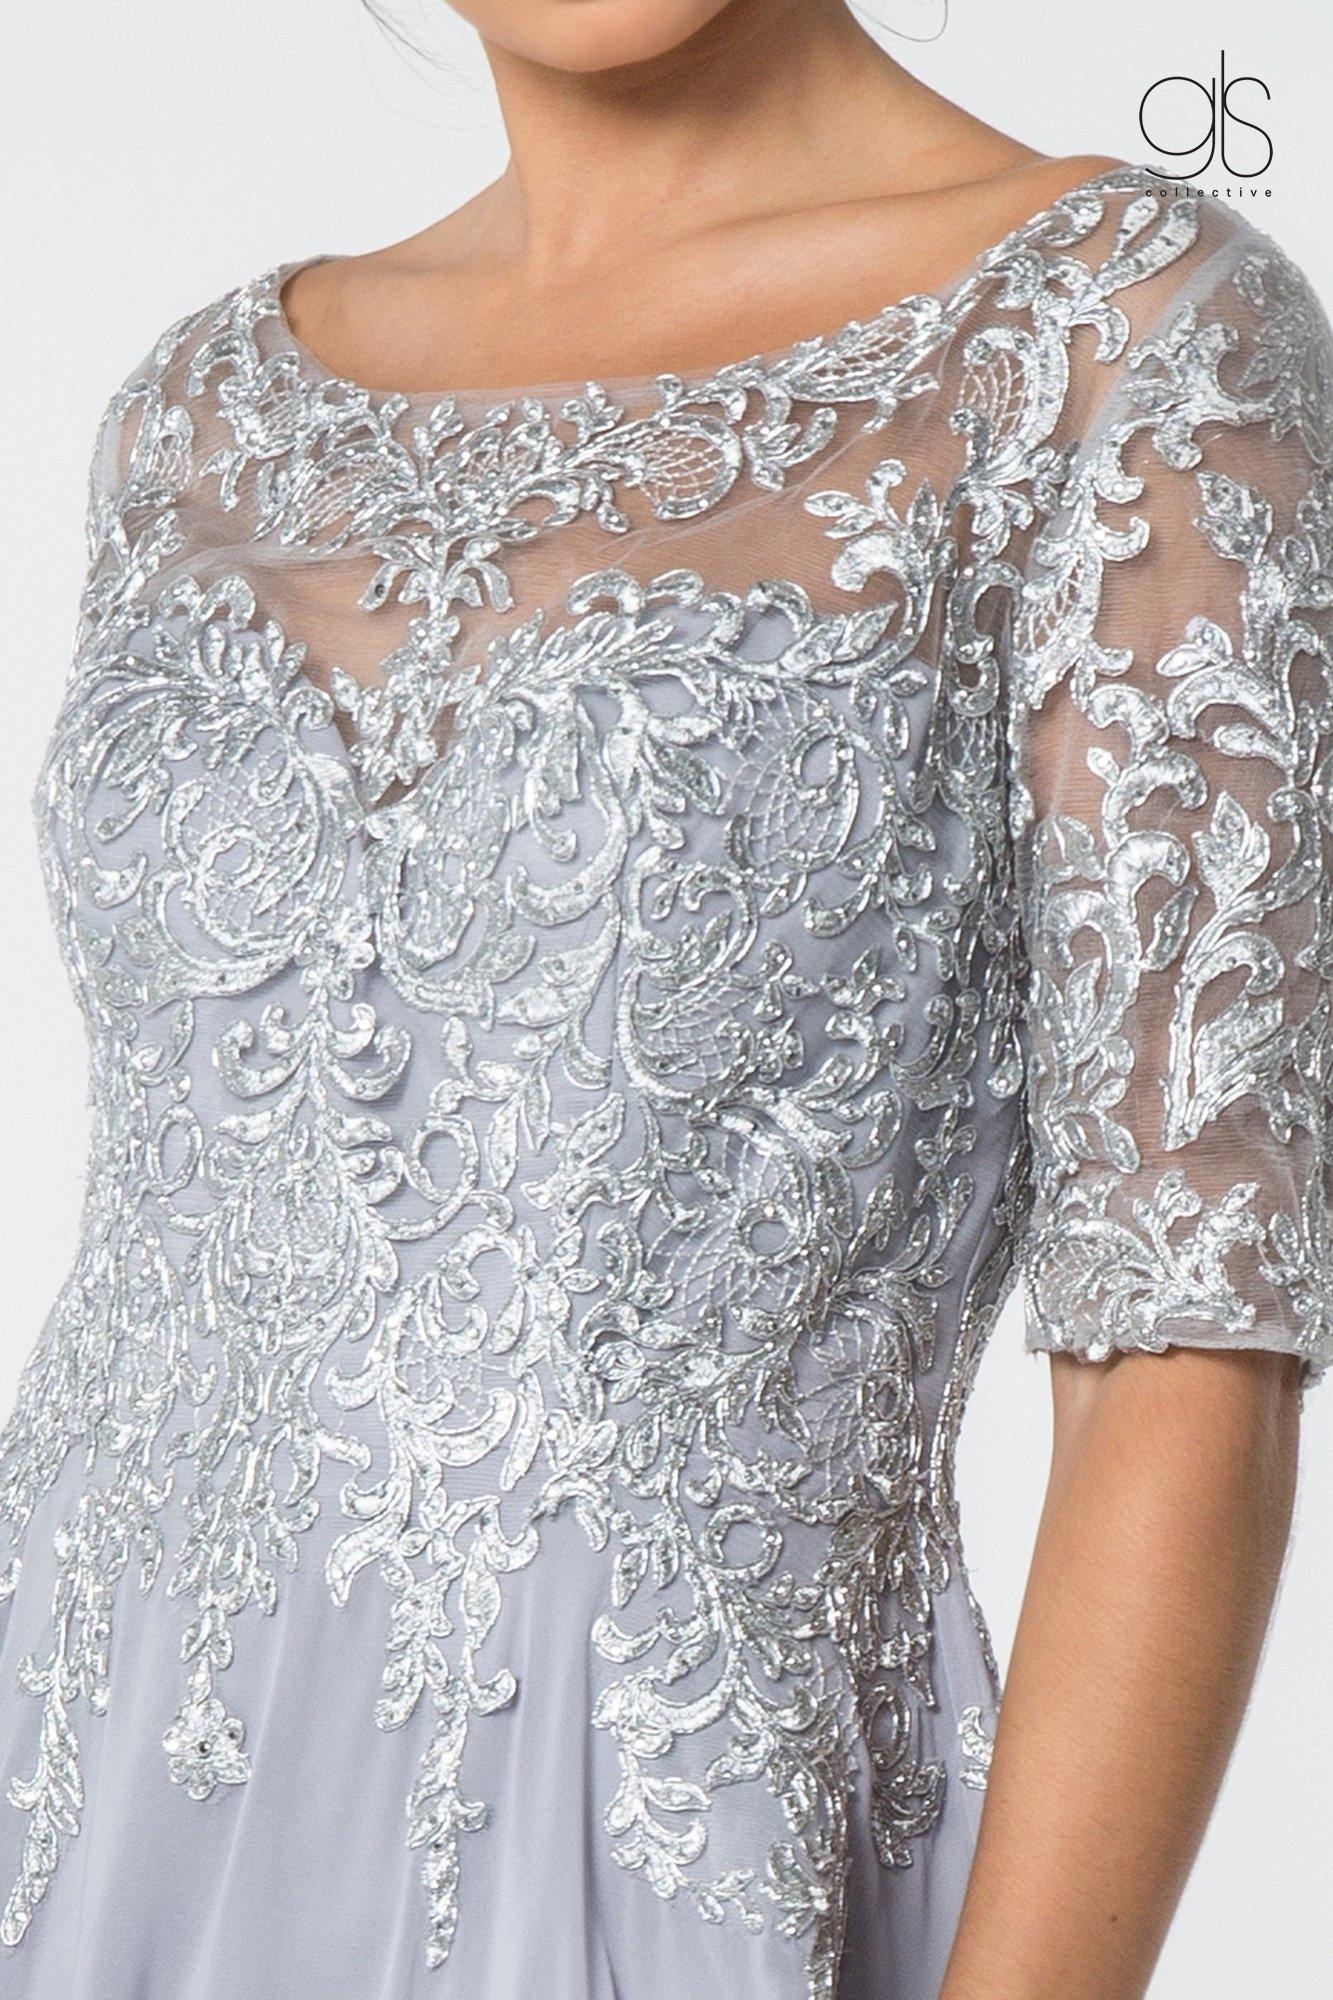 Long Formal Mother of the Bride Chiffon Dress - The Dress Outlet Elizabeth K